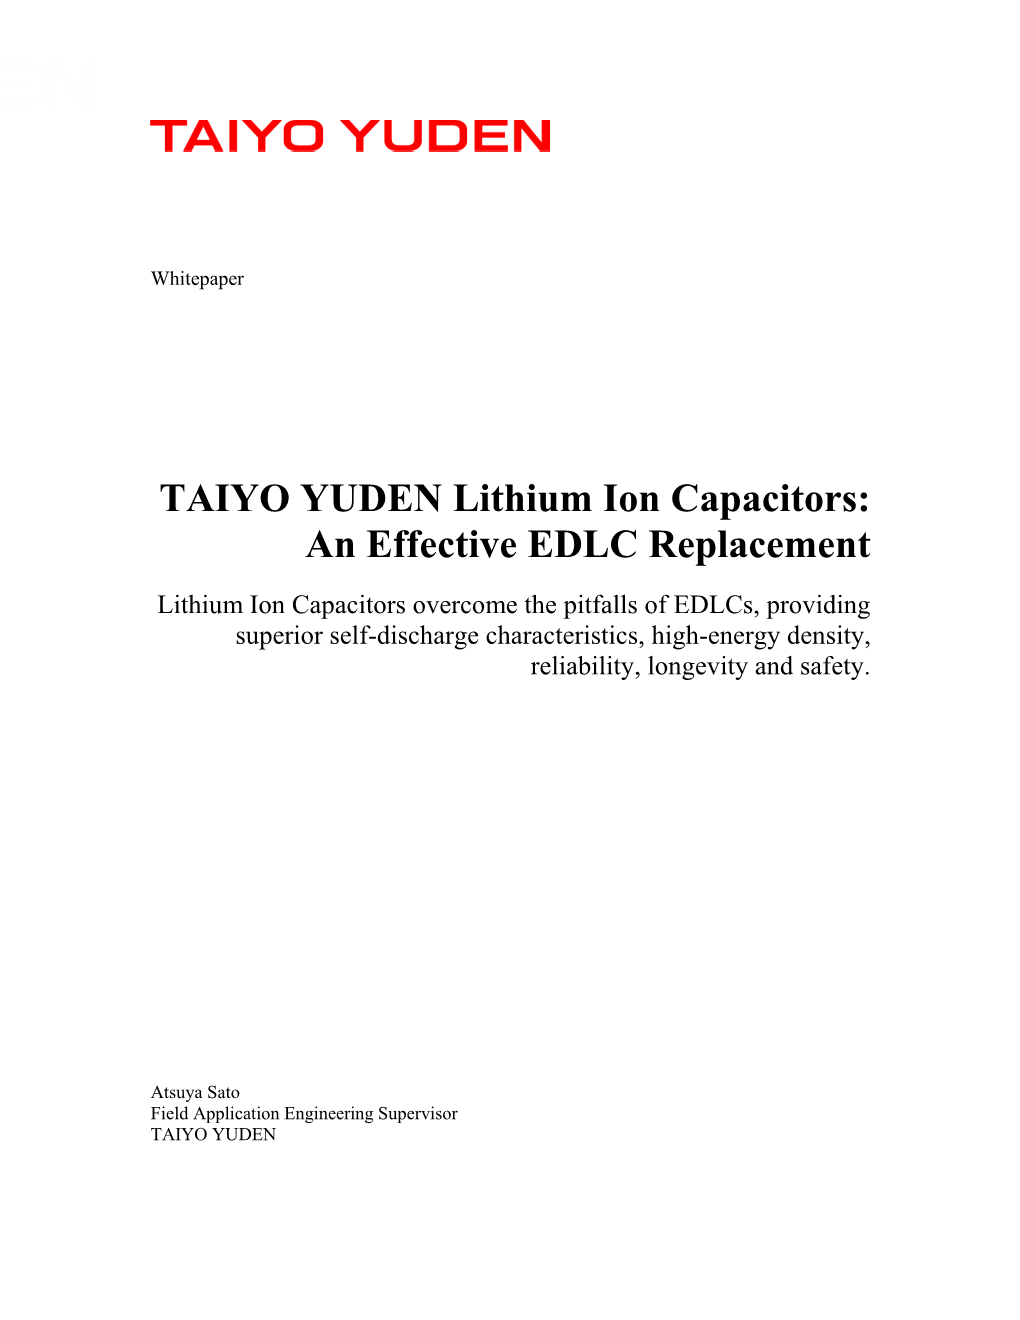 TAIYO YUDEN Lithium Ion Capacitors: an Effective EDLC Replacement